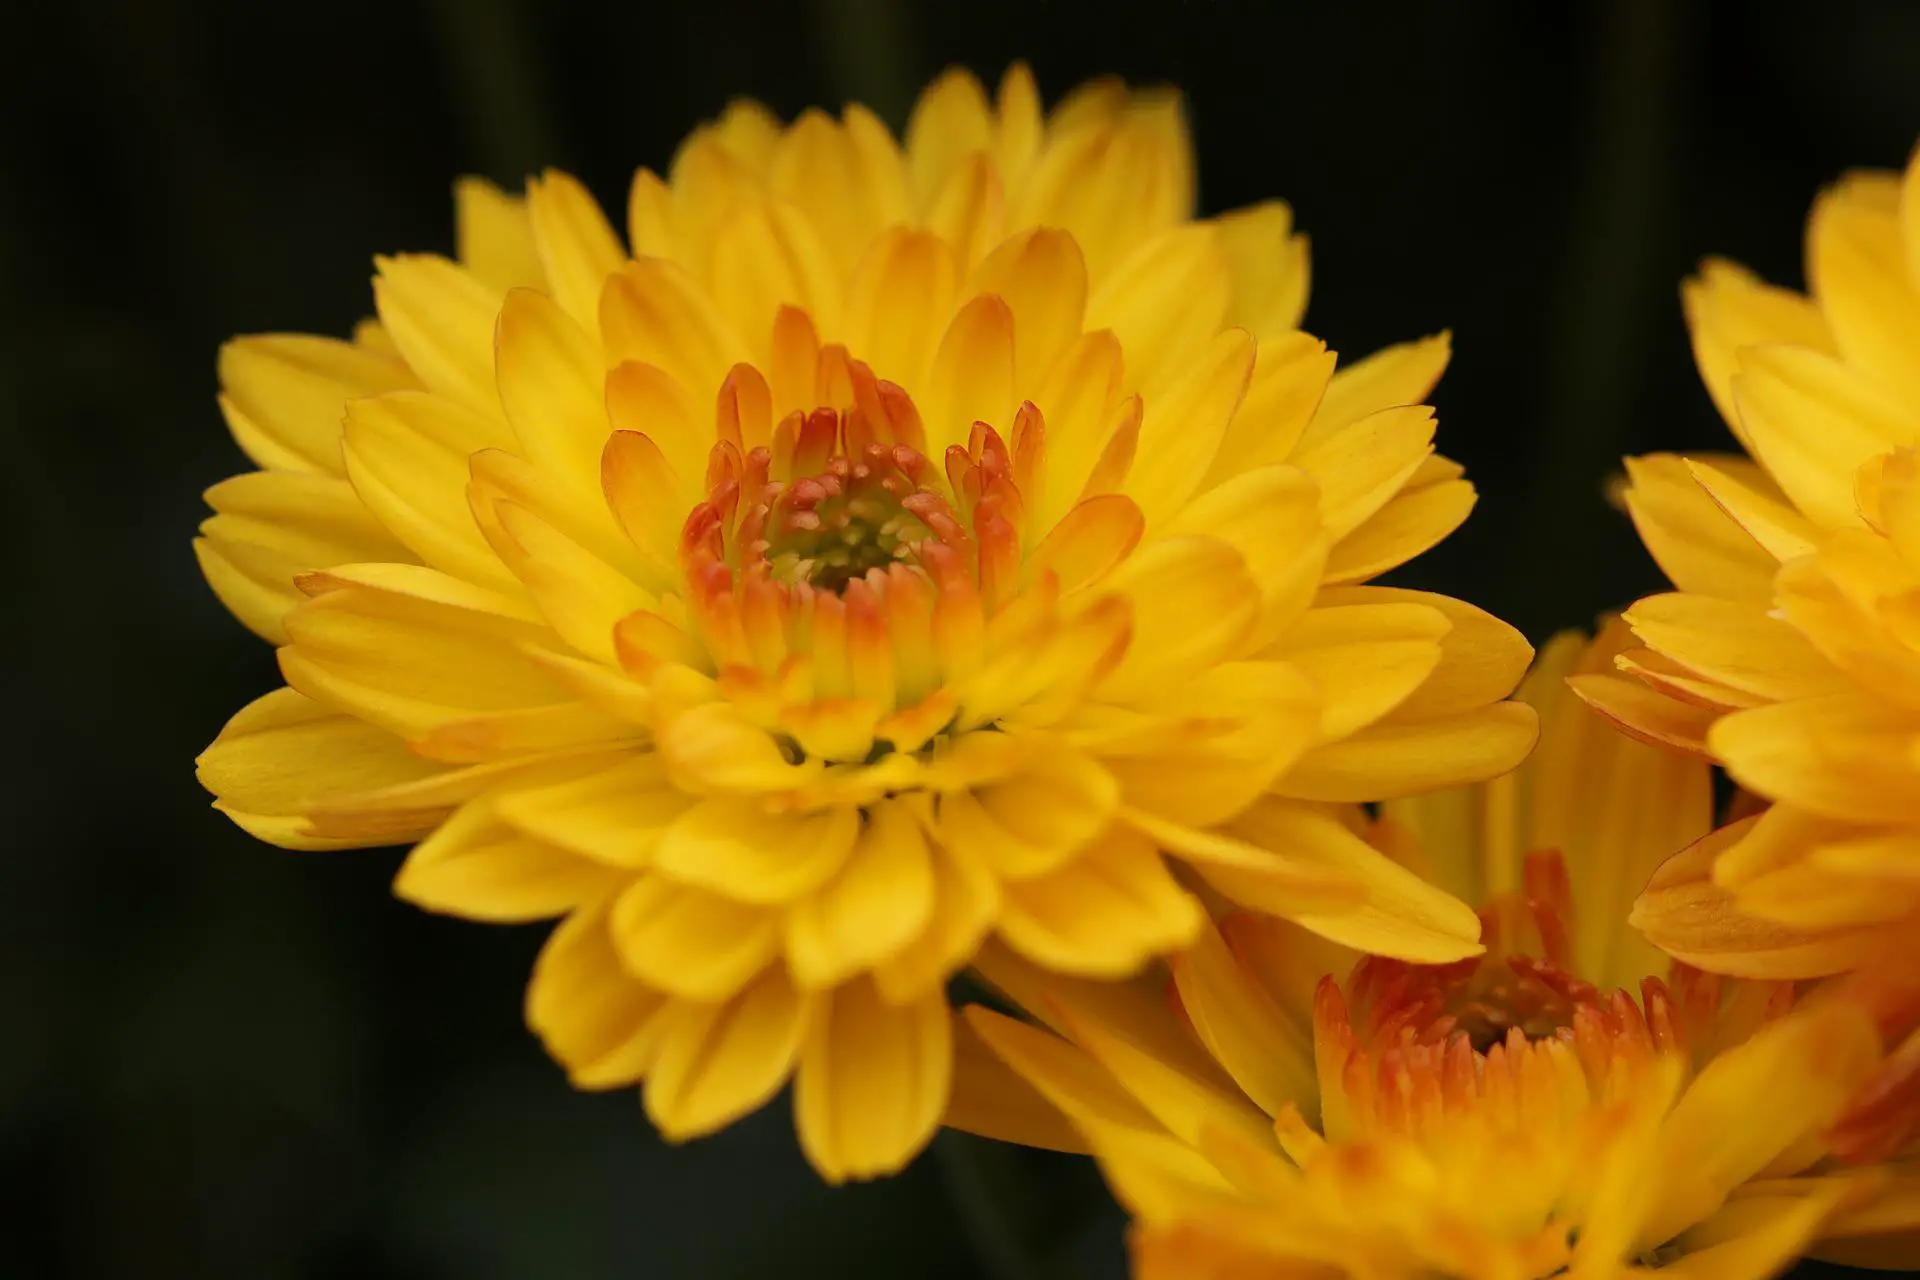 5. Dreaming Of Chrysanthemums